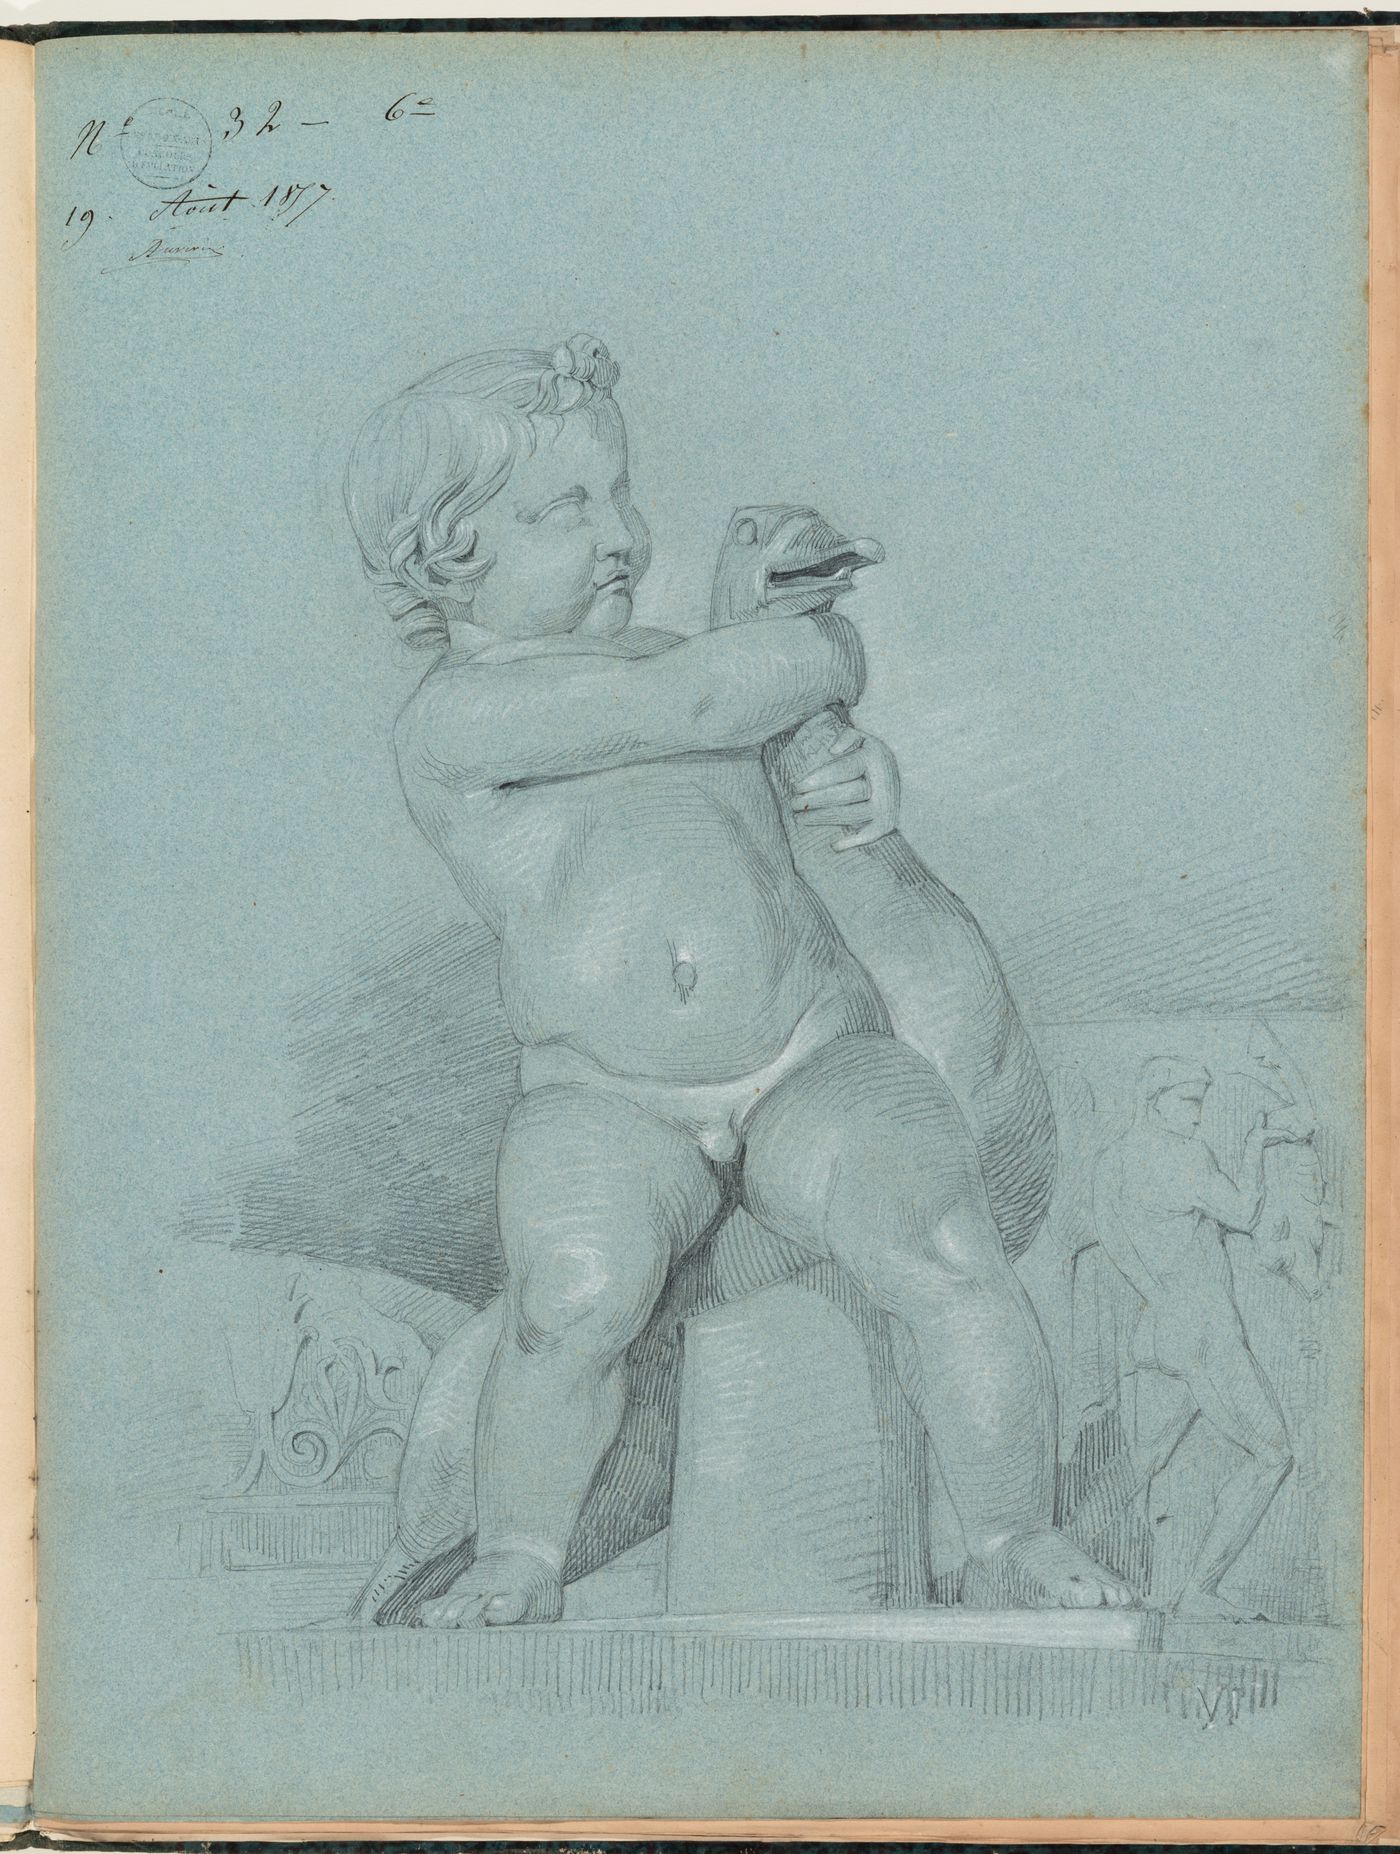 Concours d'émulation entry, 19 August 1857: Study of a Hellenistic sculpture, "Boy with a goose"